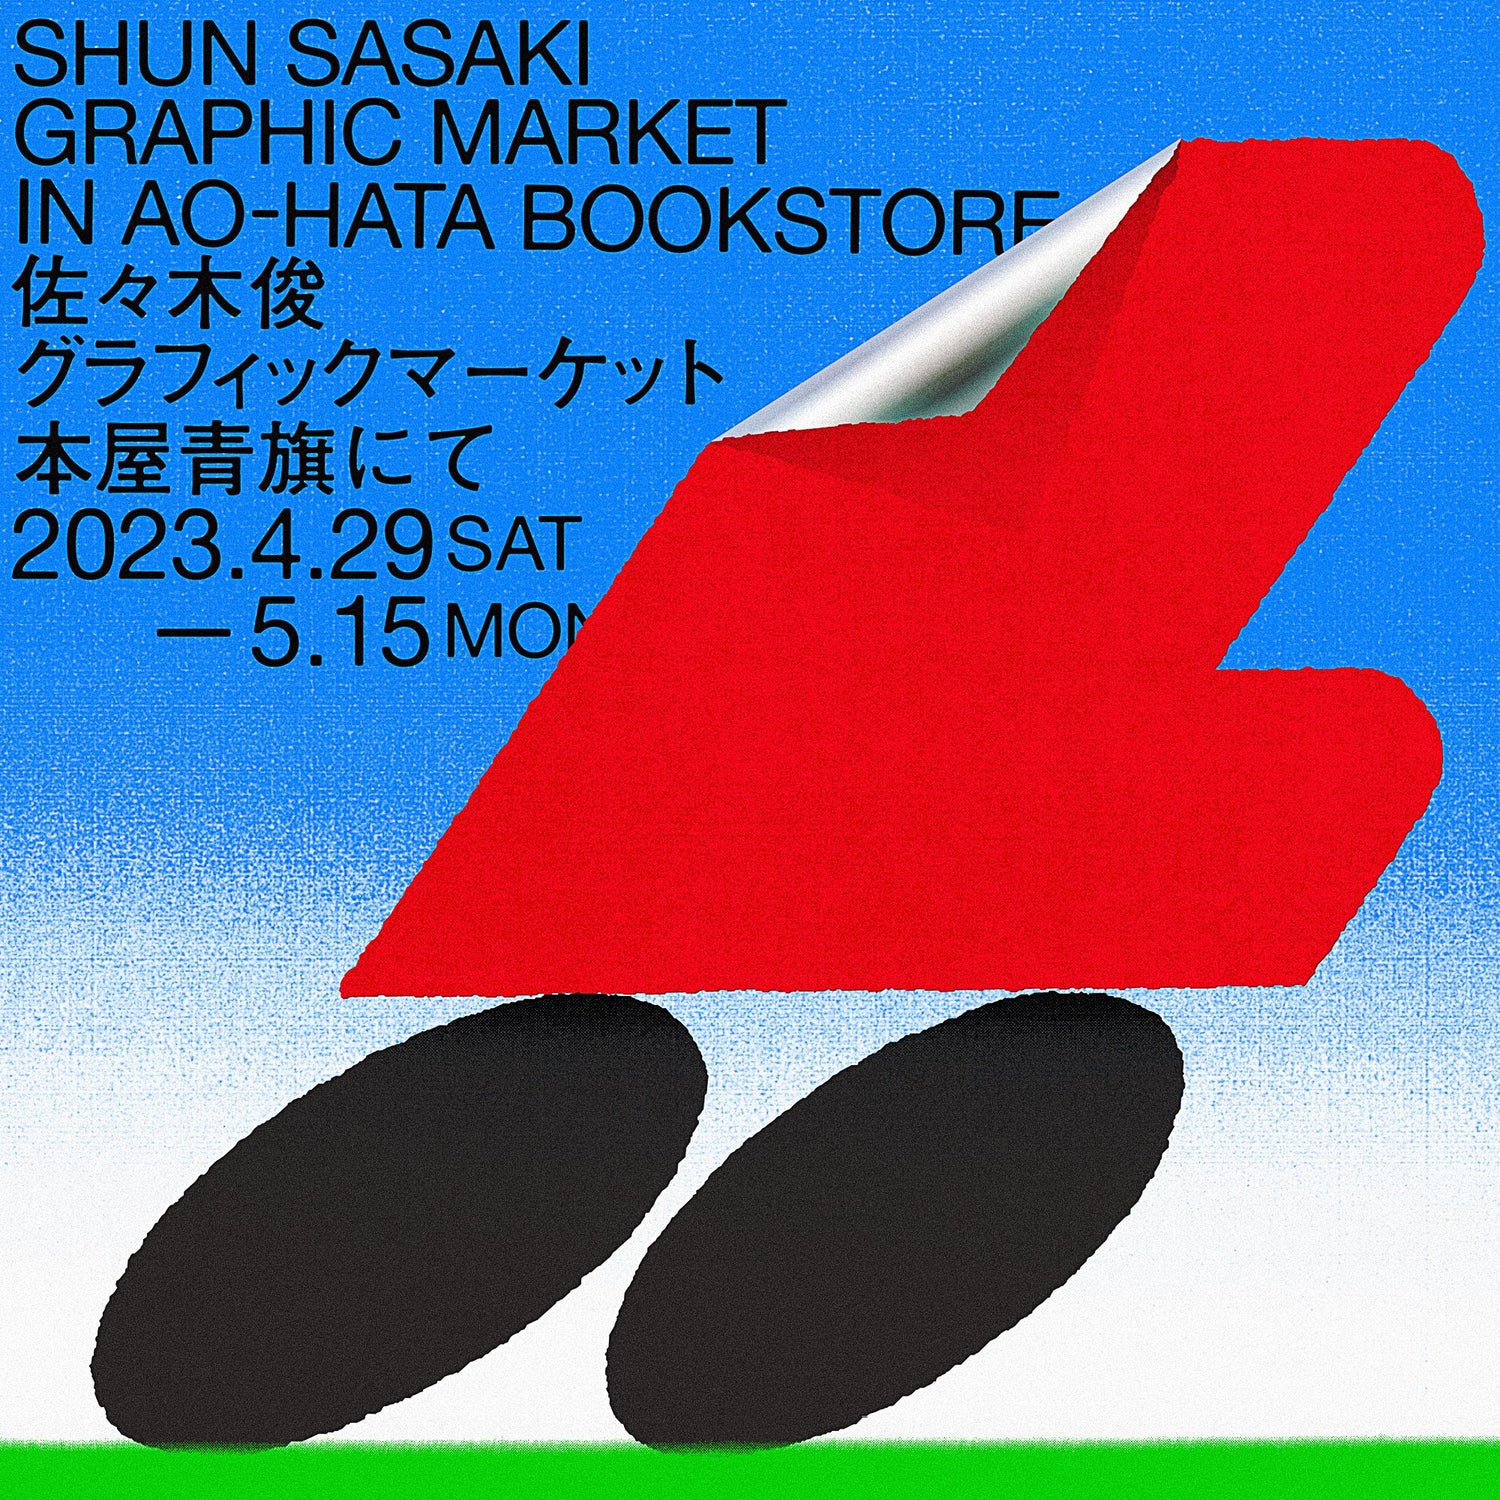 SHUN SASAKI GRAPHIC MARKET IN AO-HATA BOOKSTORE